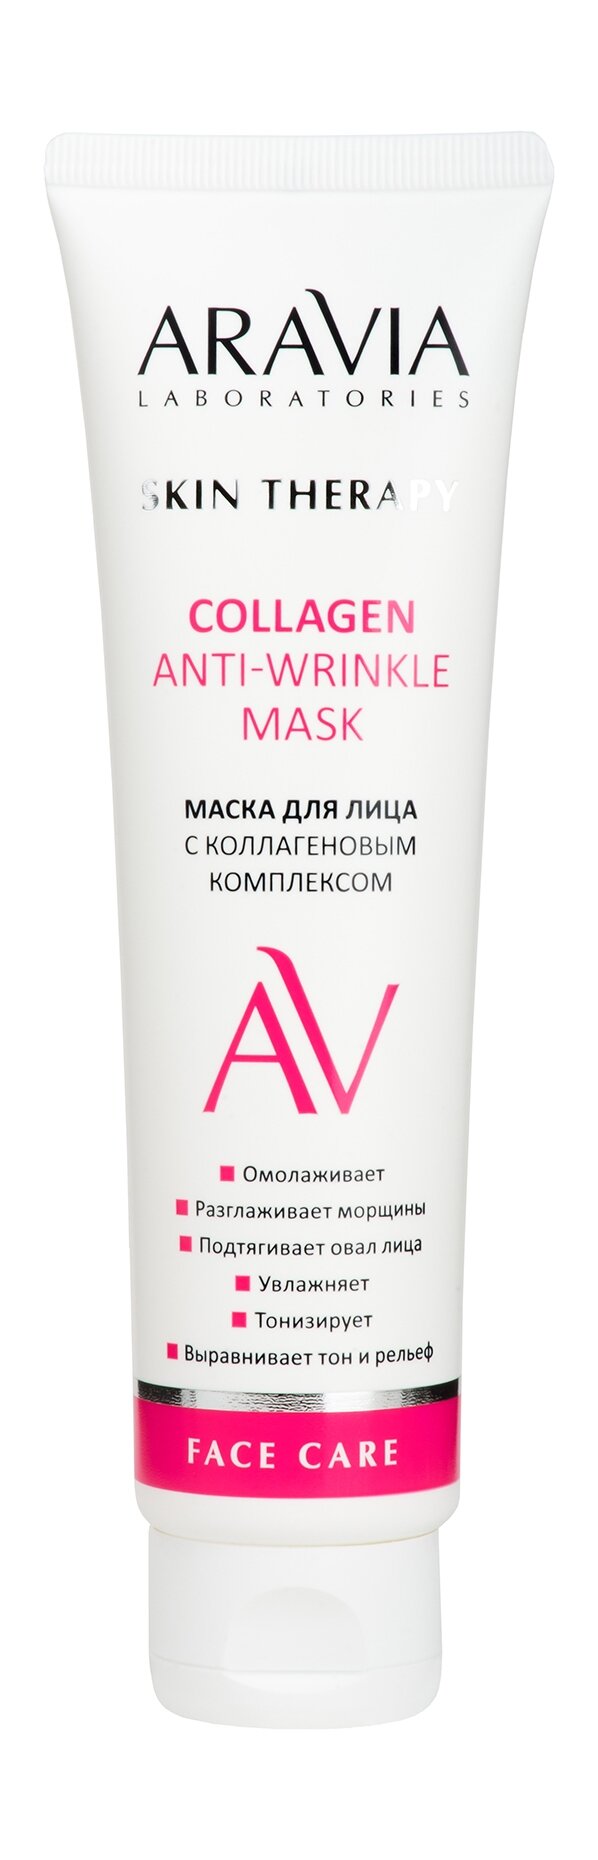 ARAVIA LABORATORIES Маска для лица с коллагеновым комплексом Collagen Anti-wrinkle Mask, 100 мл